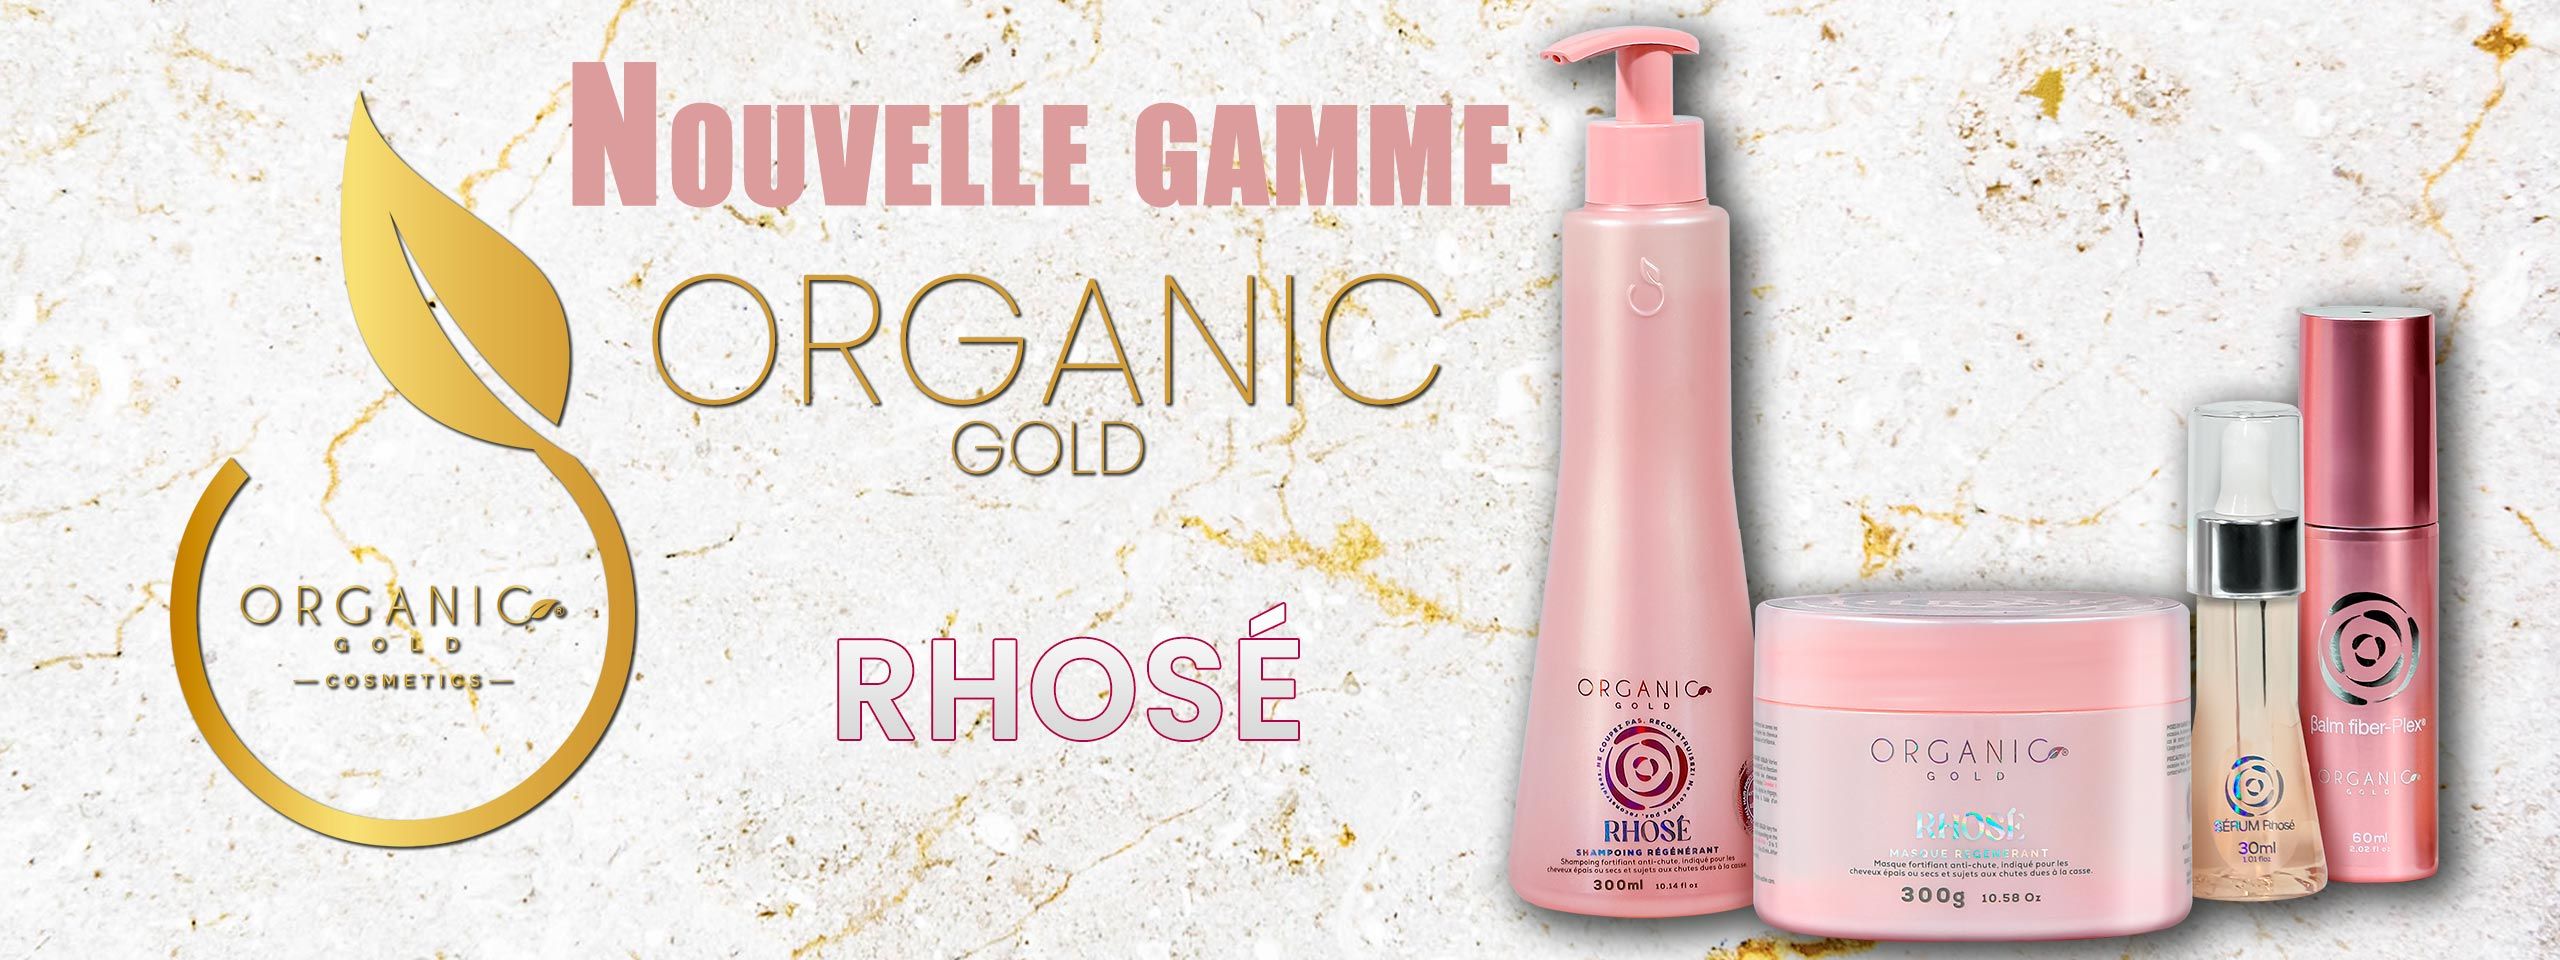 Gamme Rhose Organic Gold